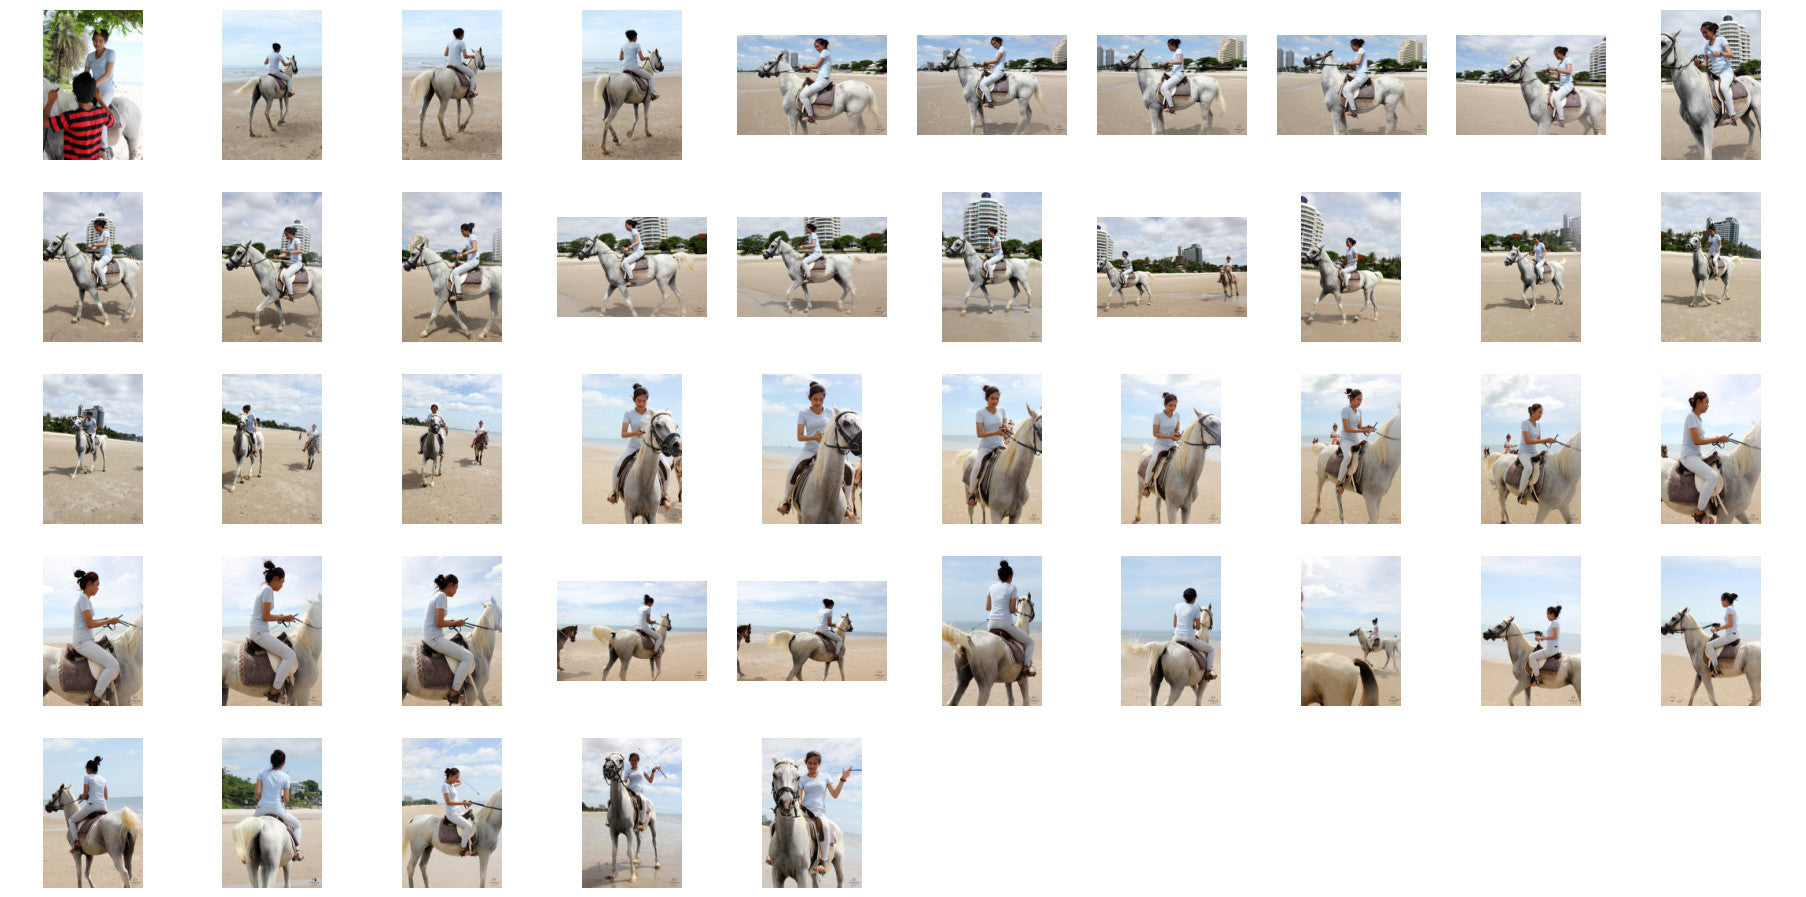 Som in Jodhpurs Riding with Saddle on White Arabian Horse, Part 1 - Riding.Vision